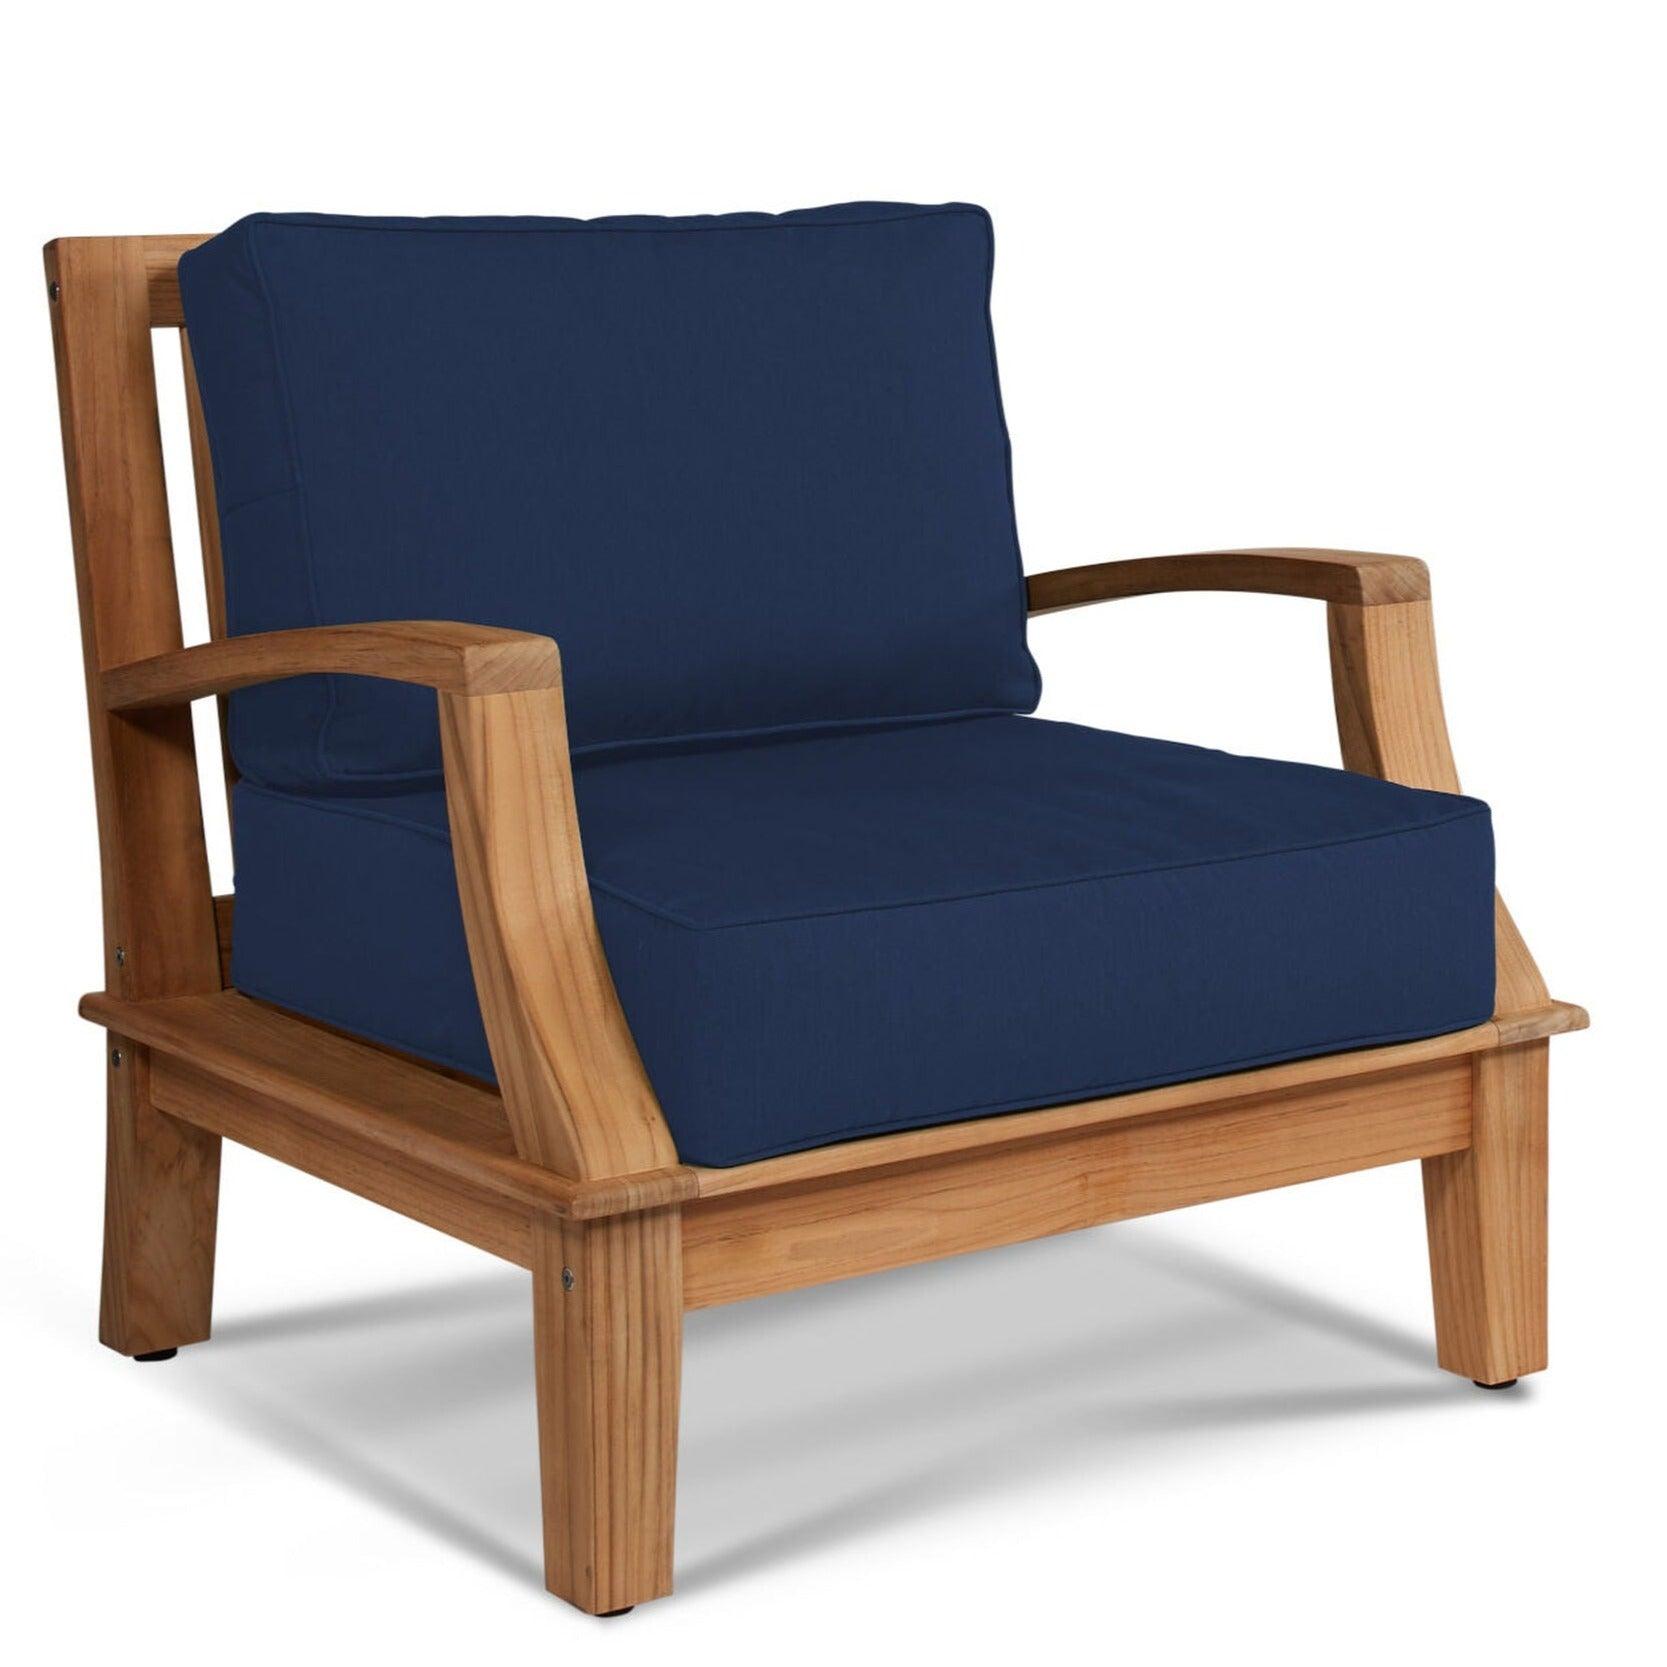 LOOMLAN Outdoor - Grande Teak Club Chair with Sunbrella Cushion - Outdoor Lounge Chairs